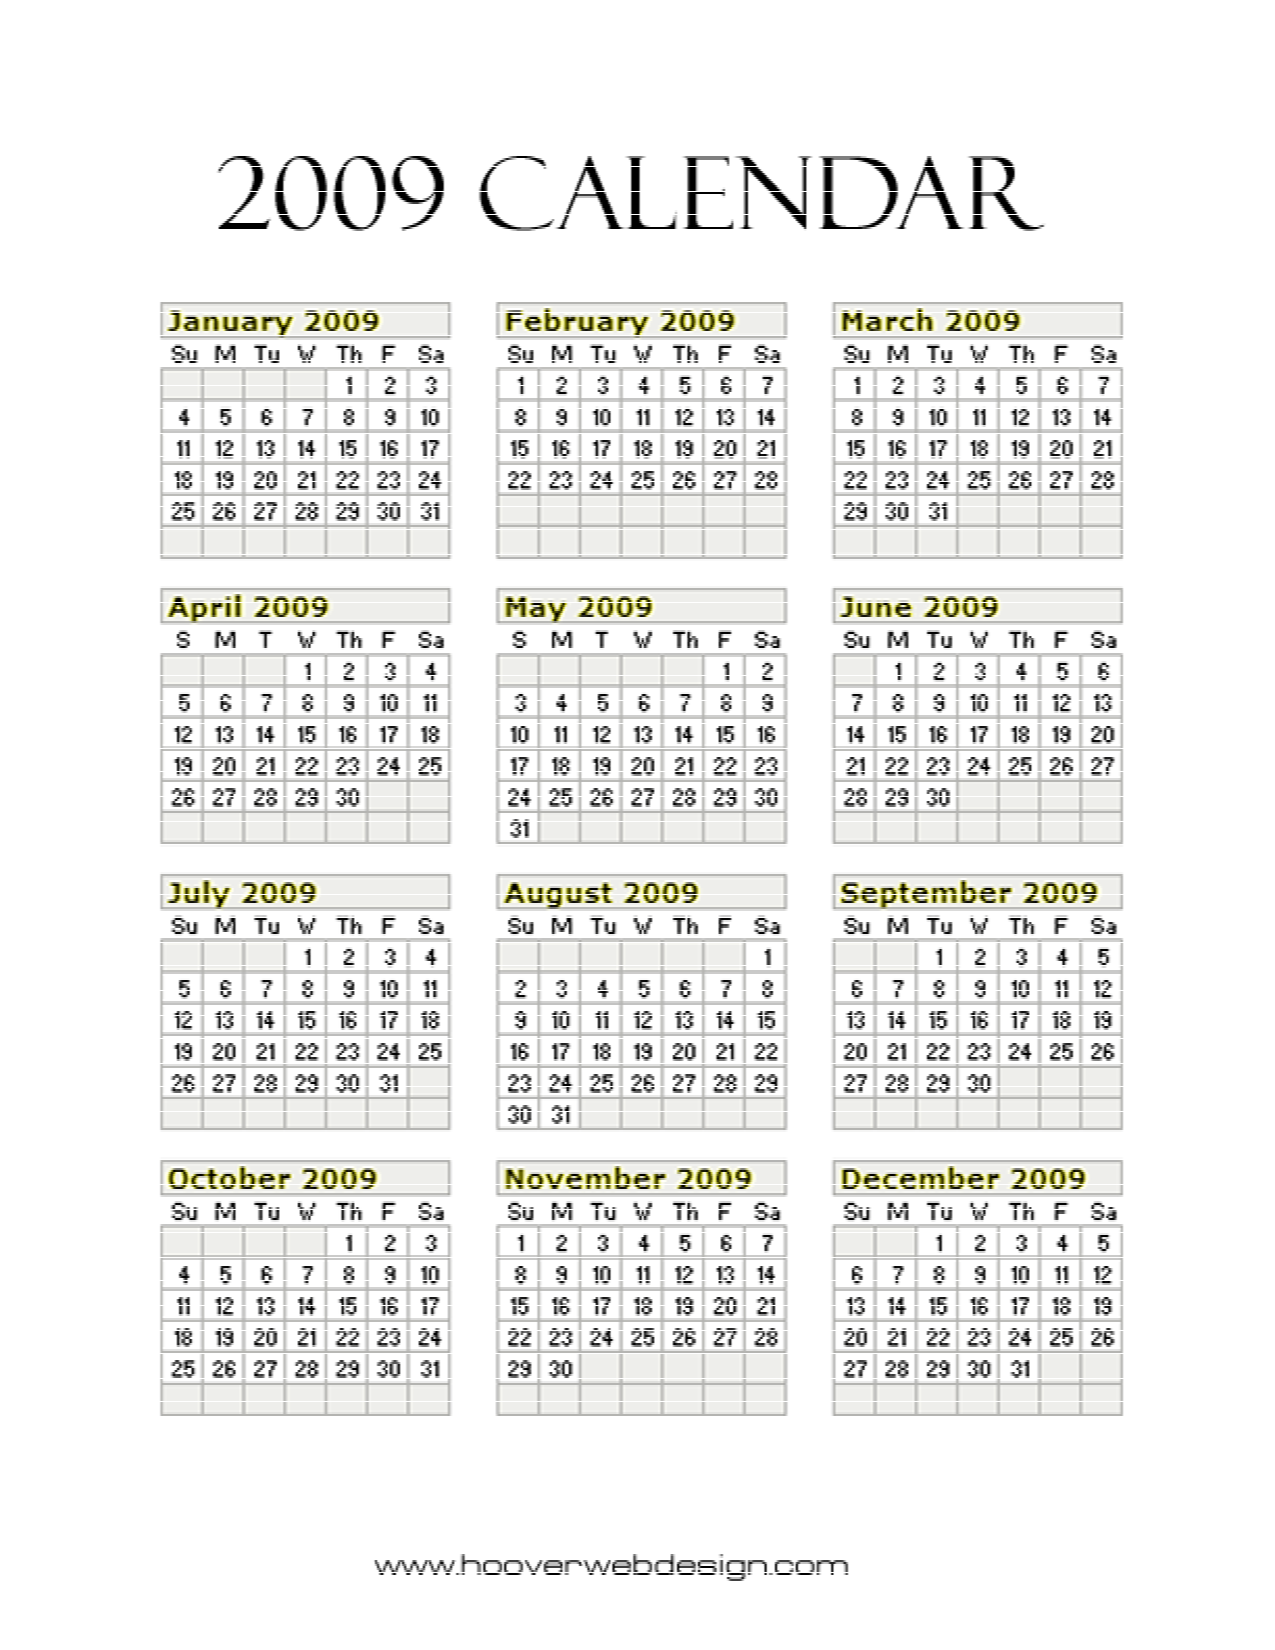 5 Best Images of Free Printable Year Calendar 2009 2009 Calendar